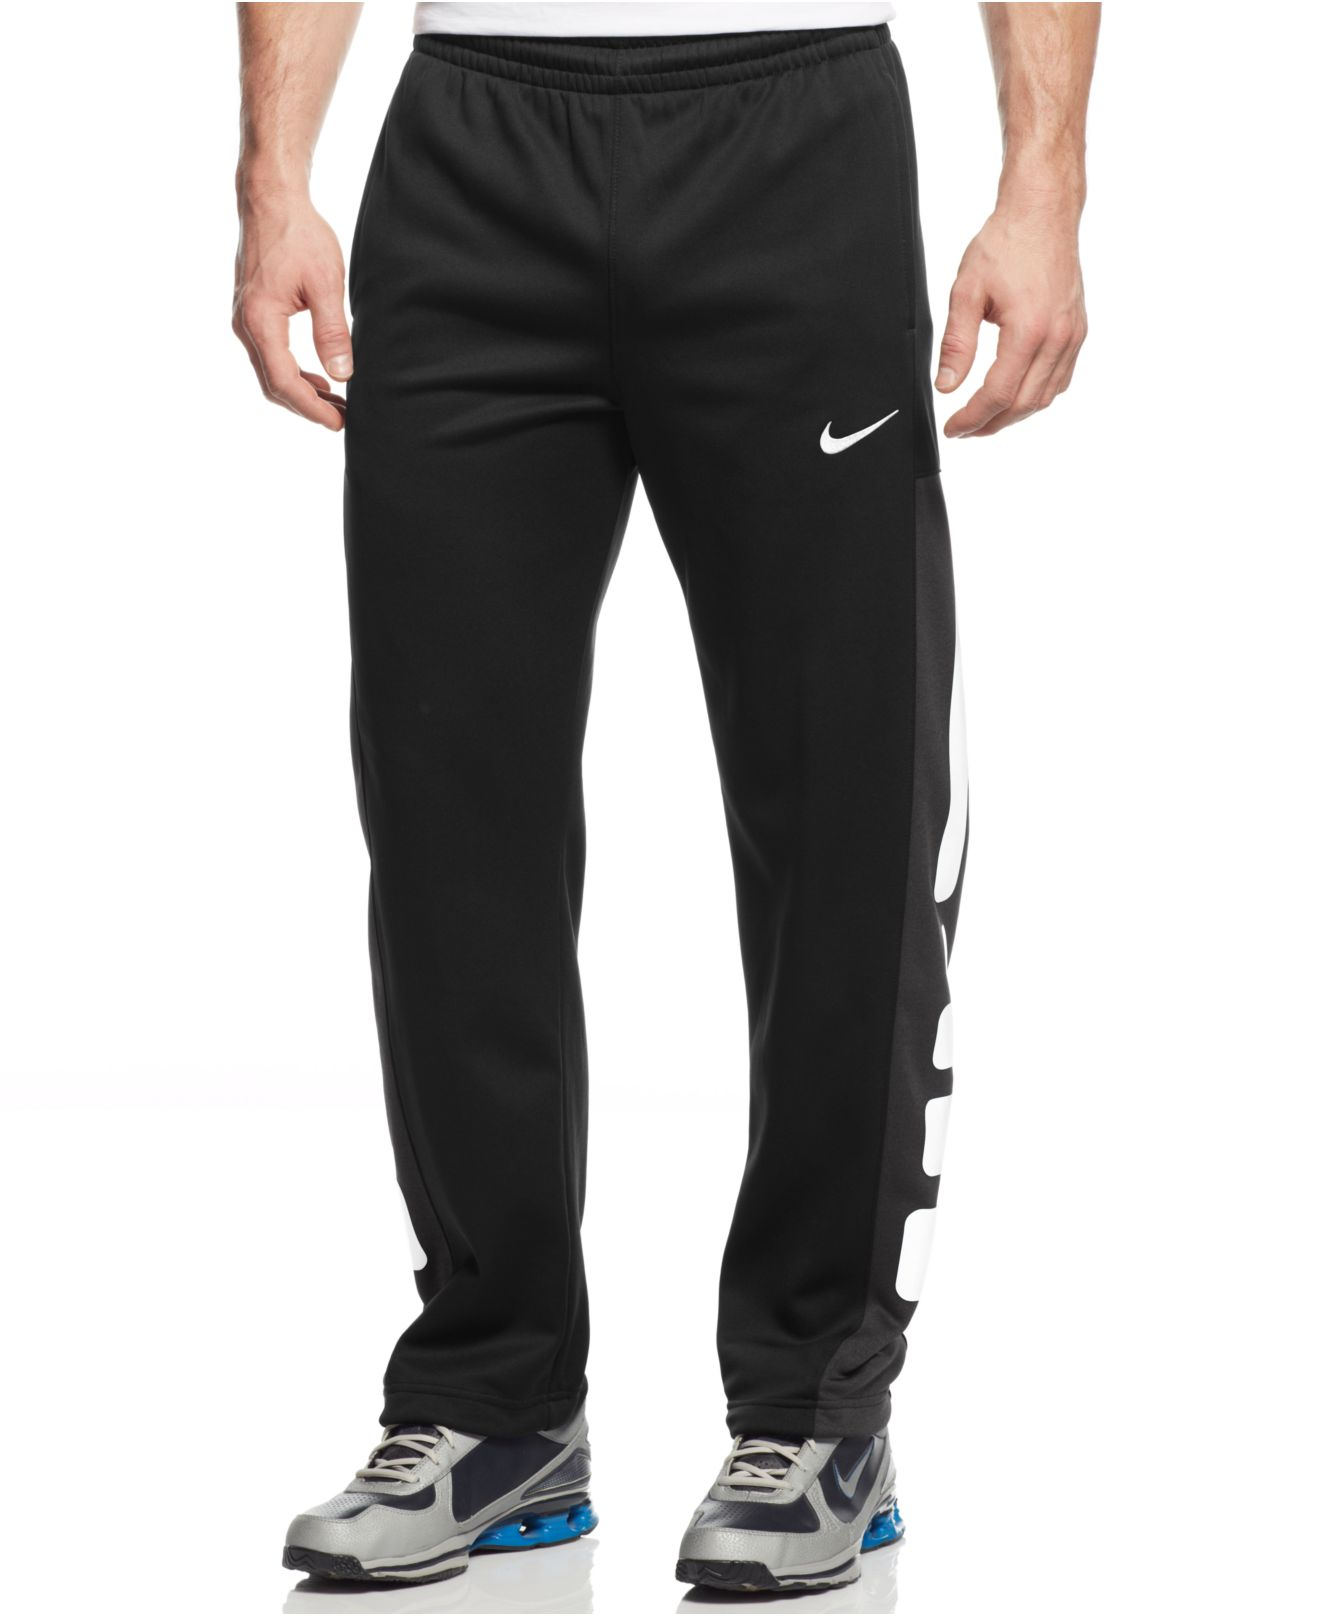 Nike Elite Striped Fleece Performance Pants in Black/White (Black) for ...